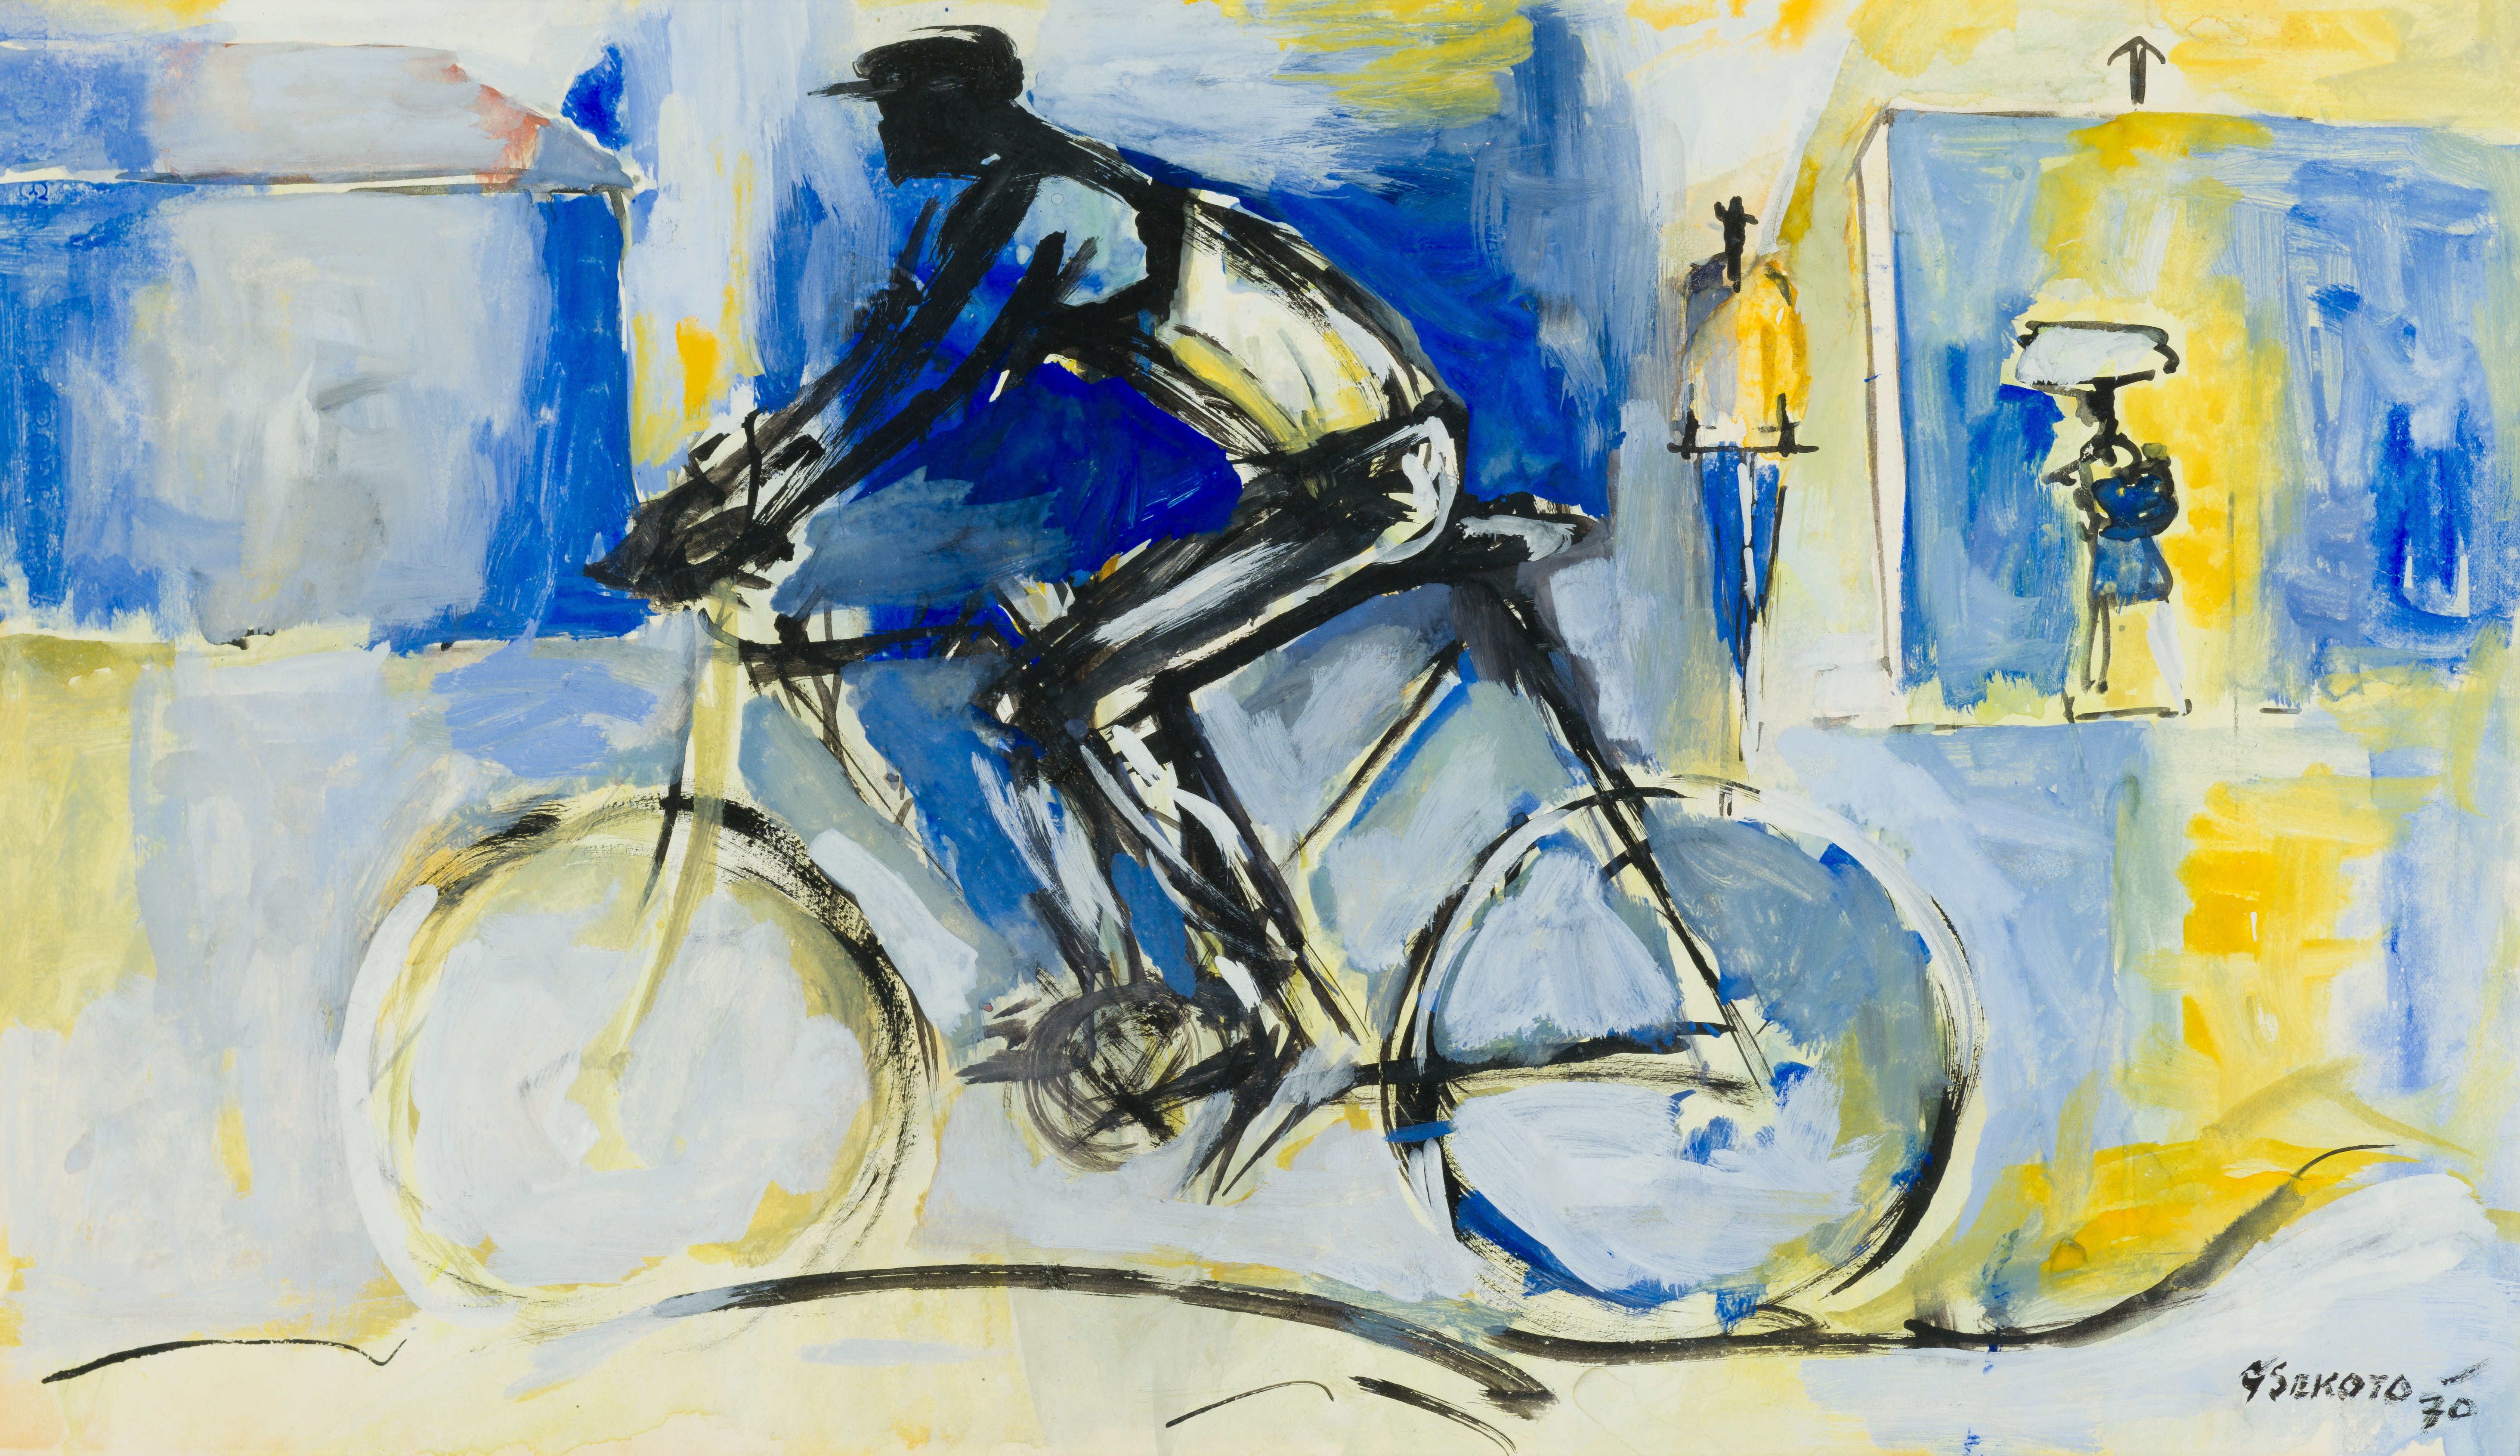 Gerard Sekoto; The Cyclist